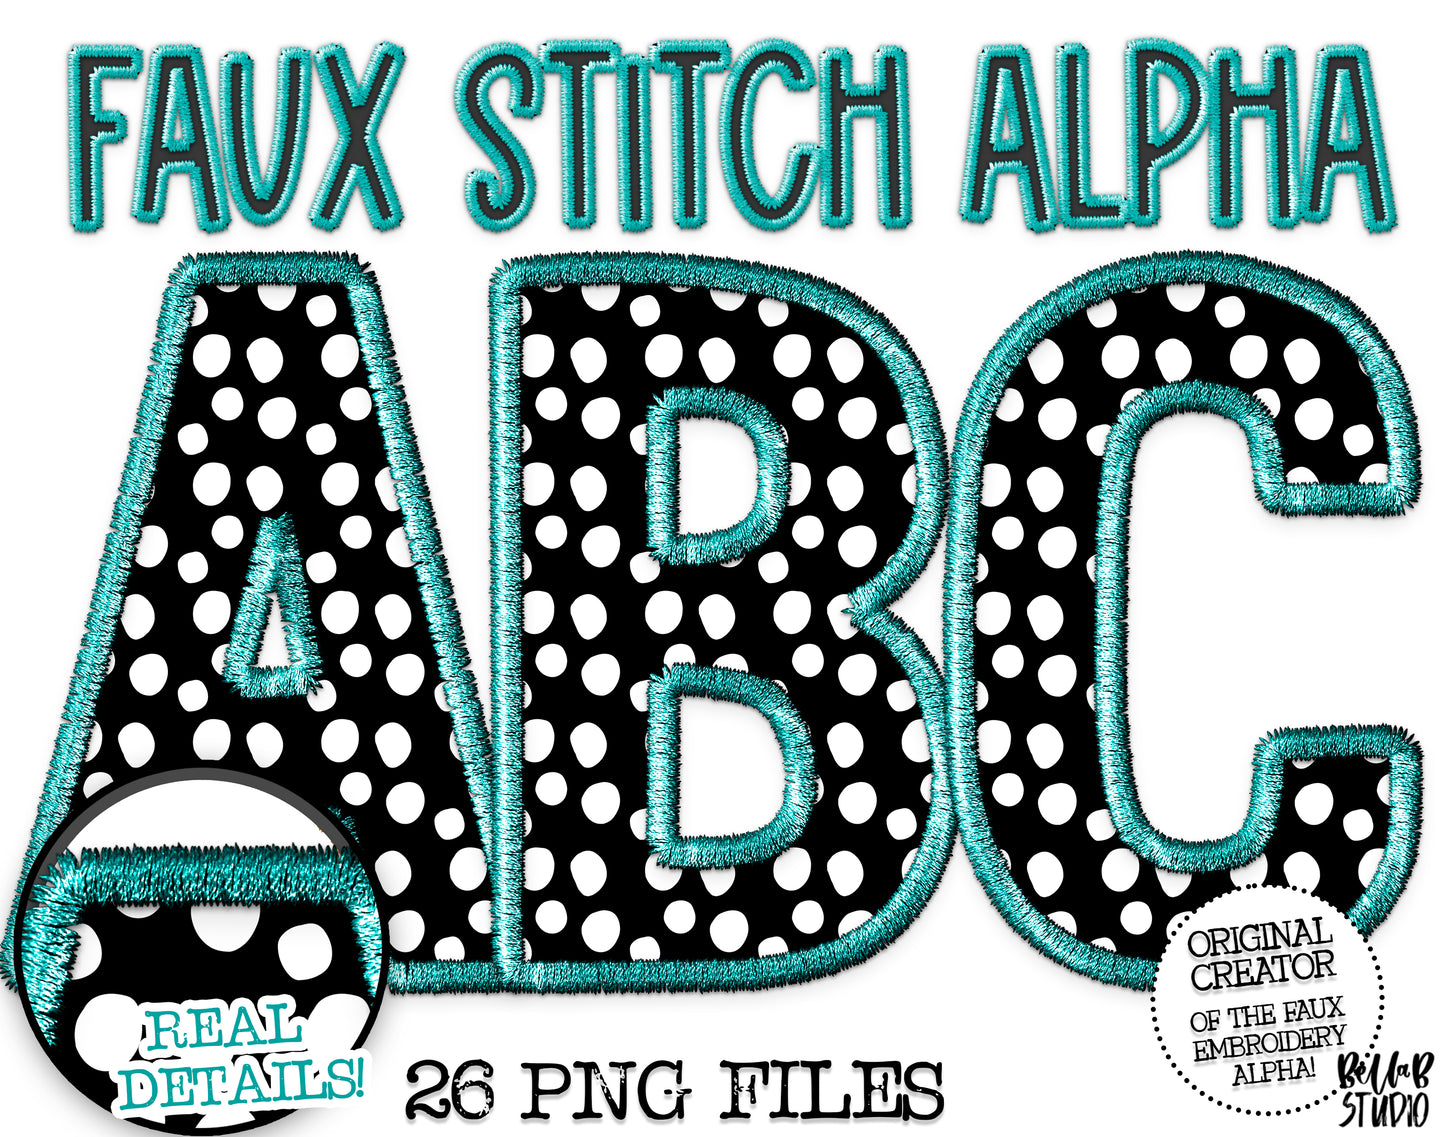 Faux Stitch Alphabet Set - Polka Dot Teal